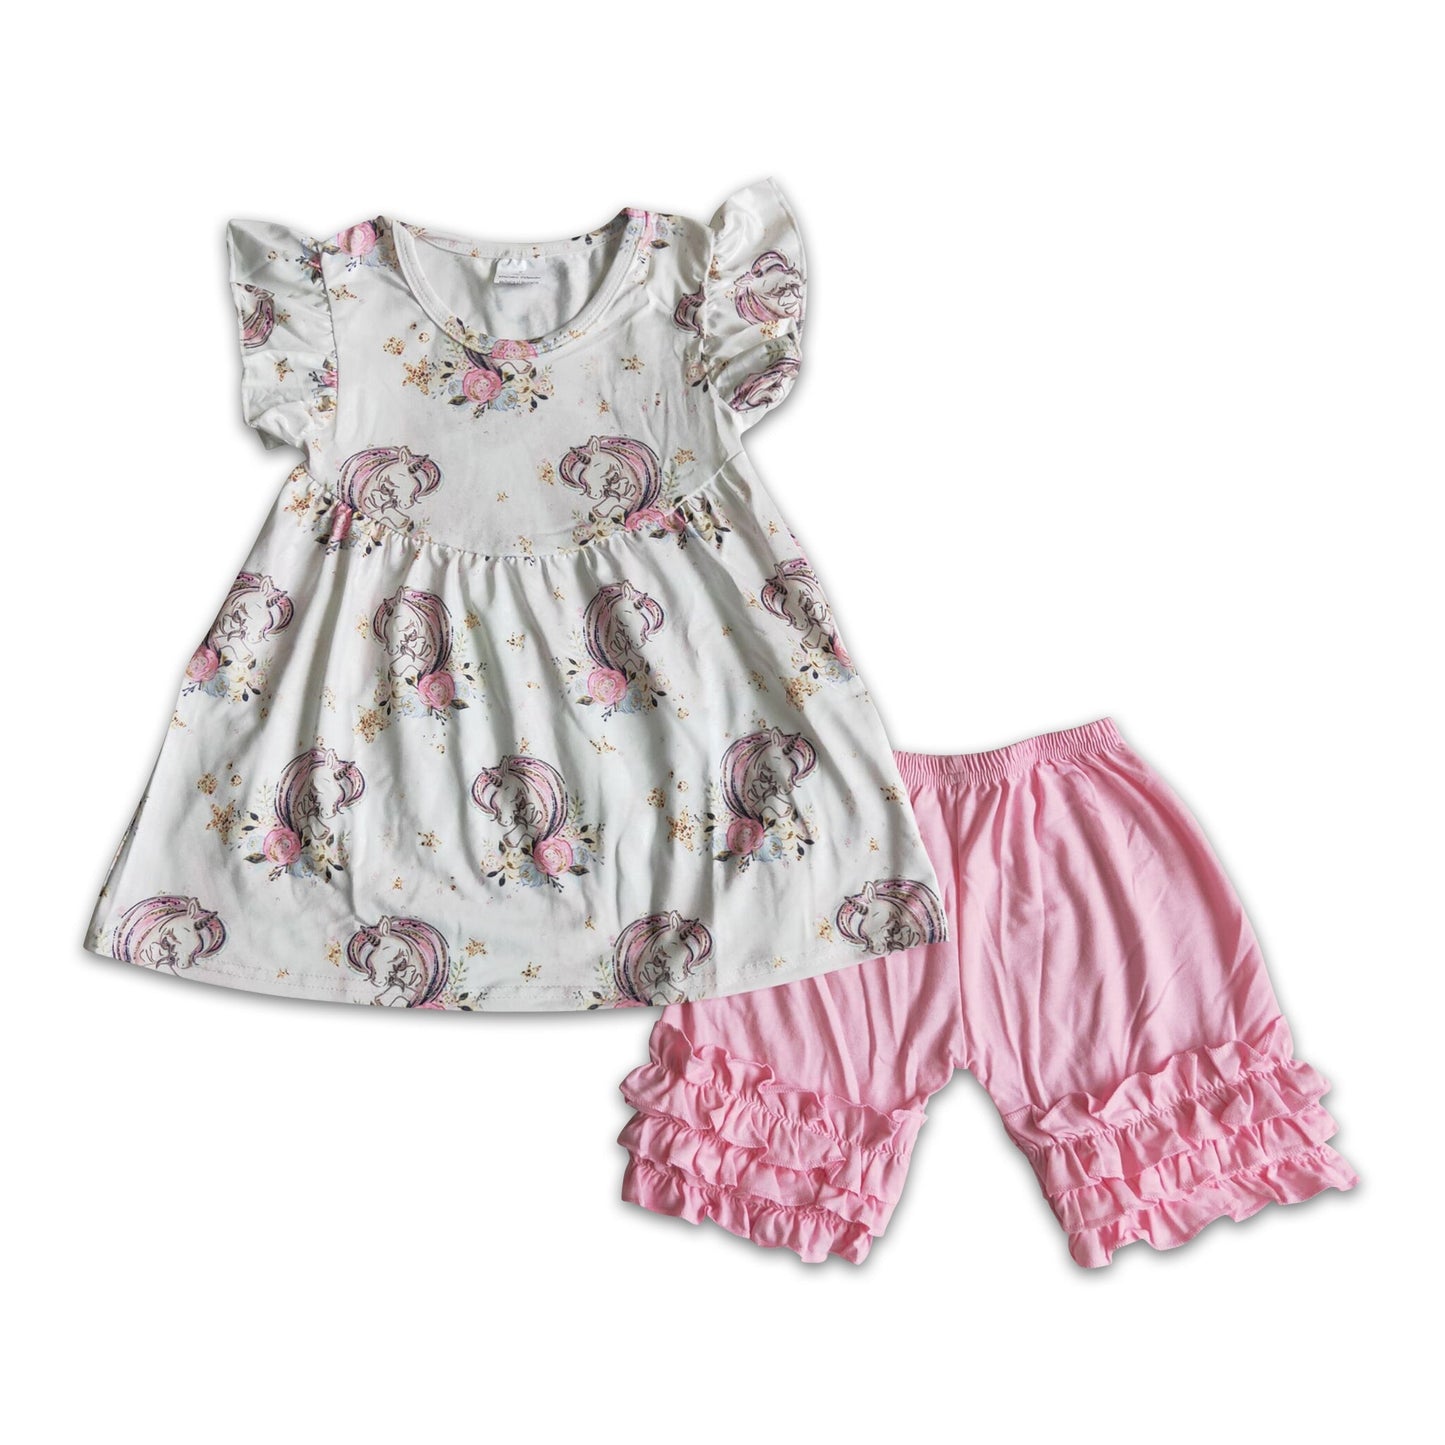 Unicorn print flutter sleeve shirt pink shorts girls clothing set